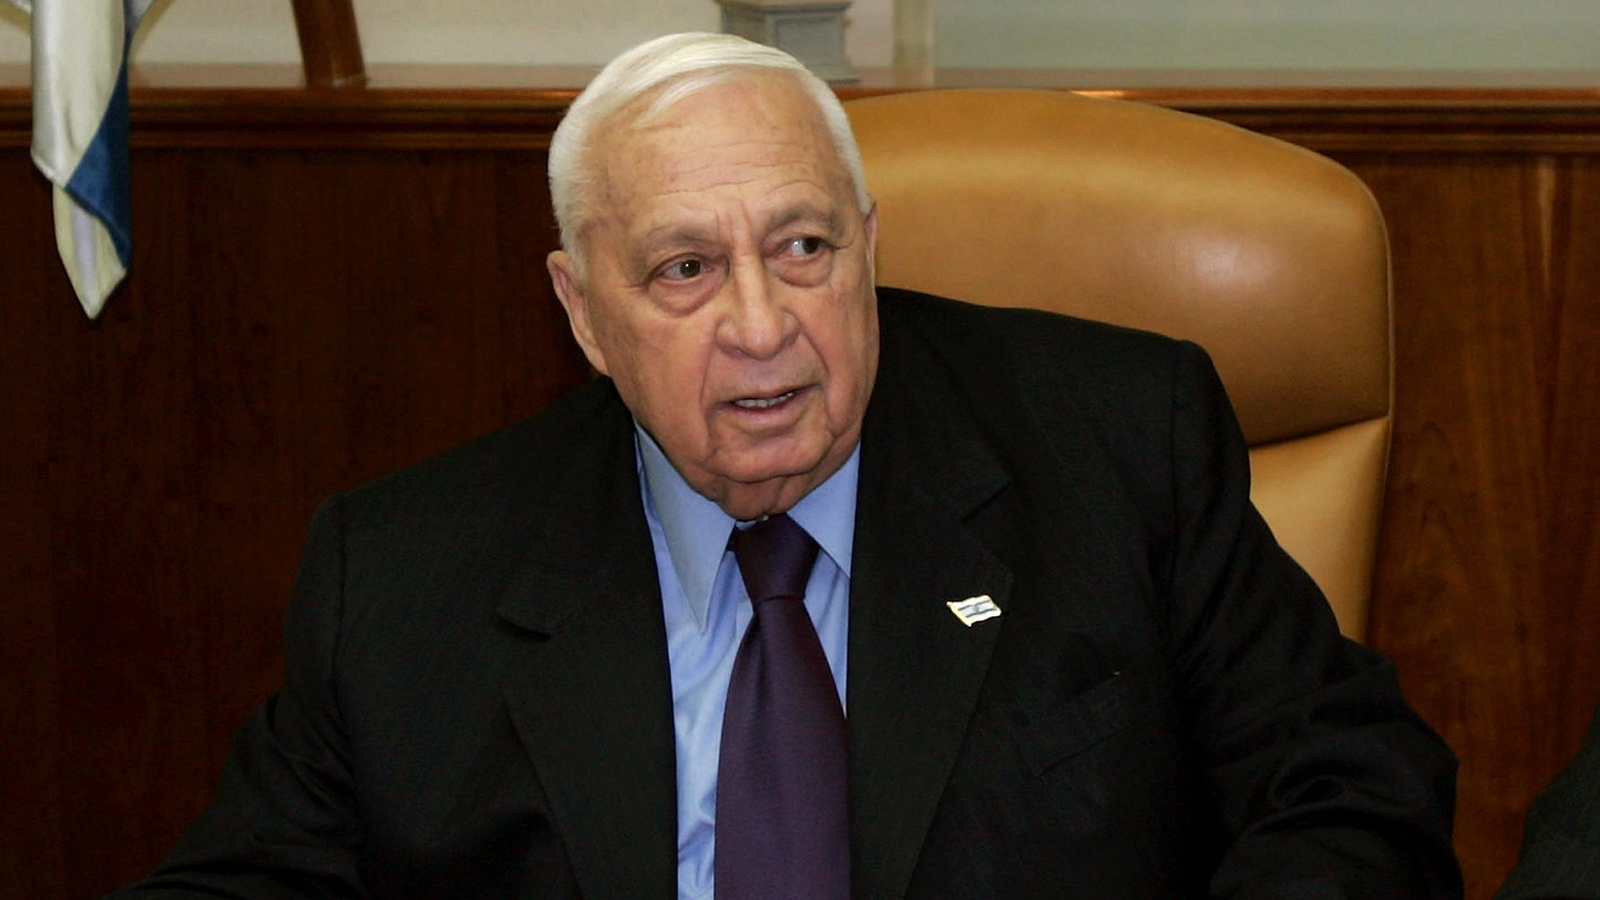 Ariel Sharon lies in state in Israeli parliament